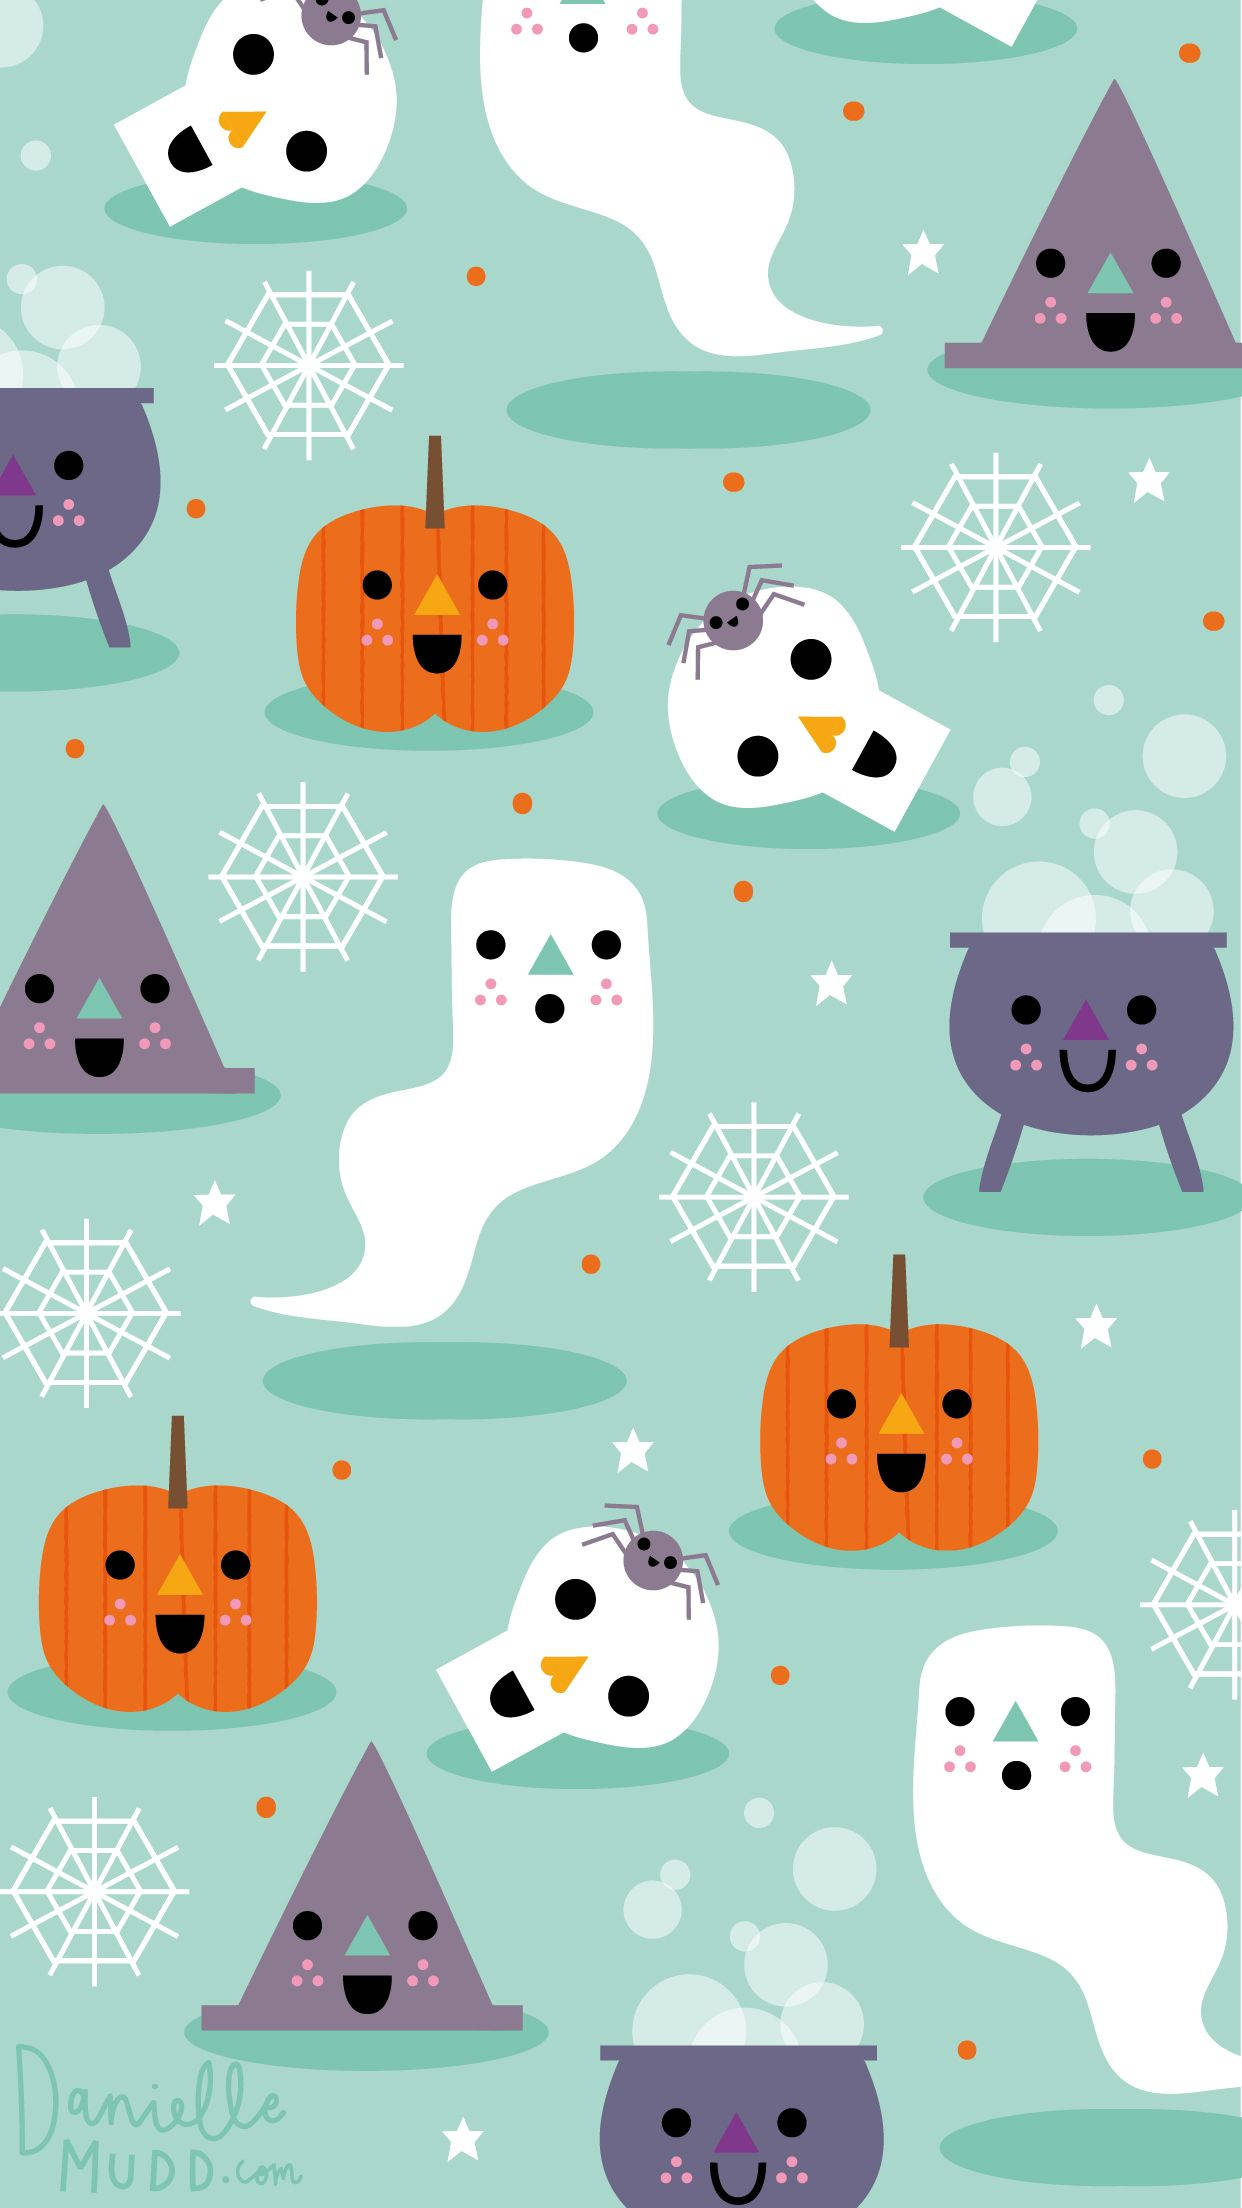 Halloween Background Iphone